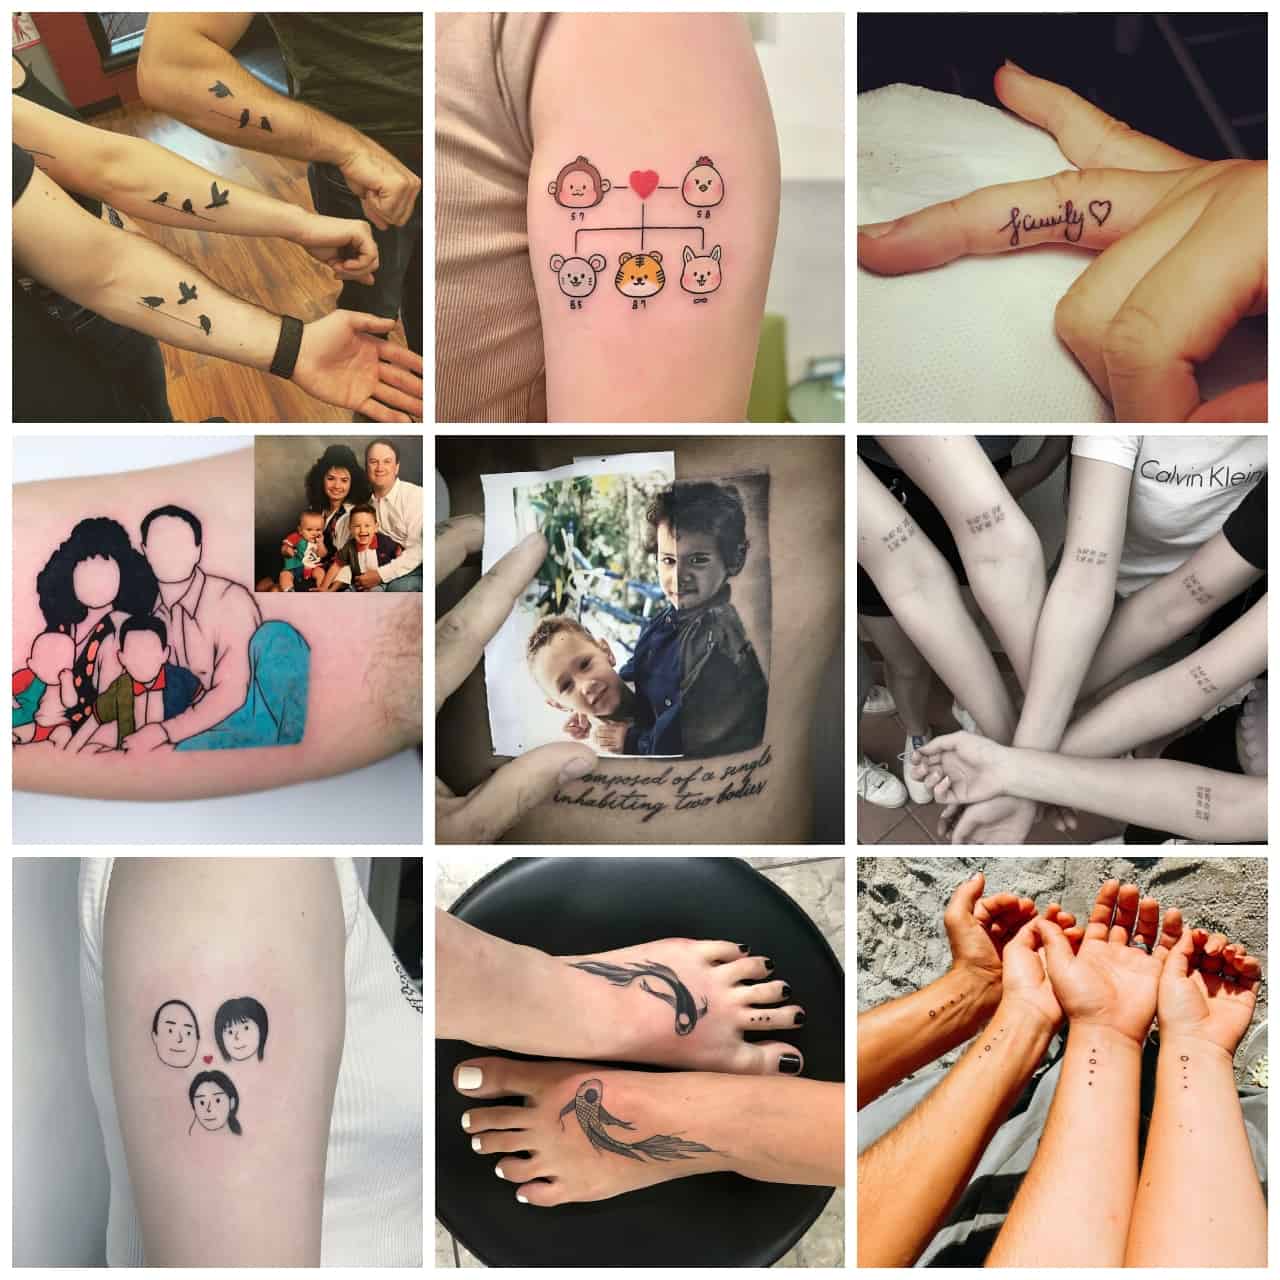 9+ Best Family Tattoo Designs